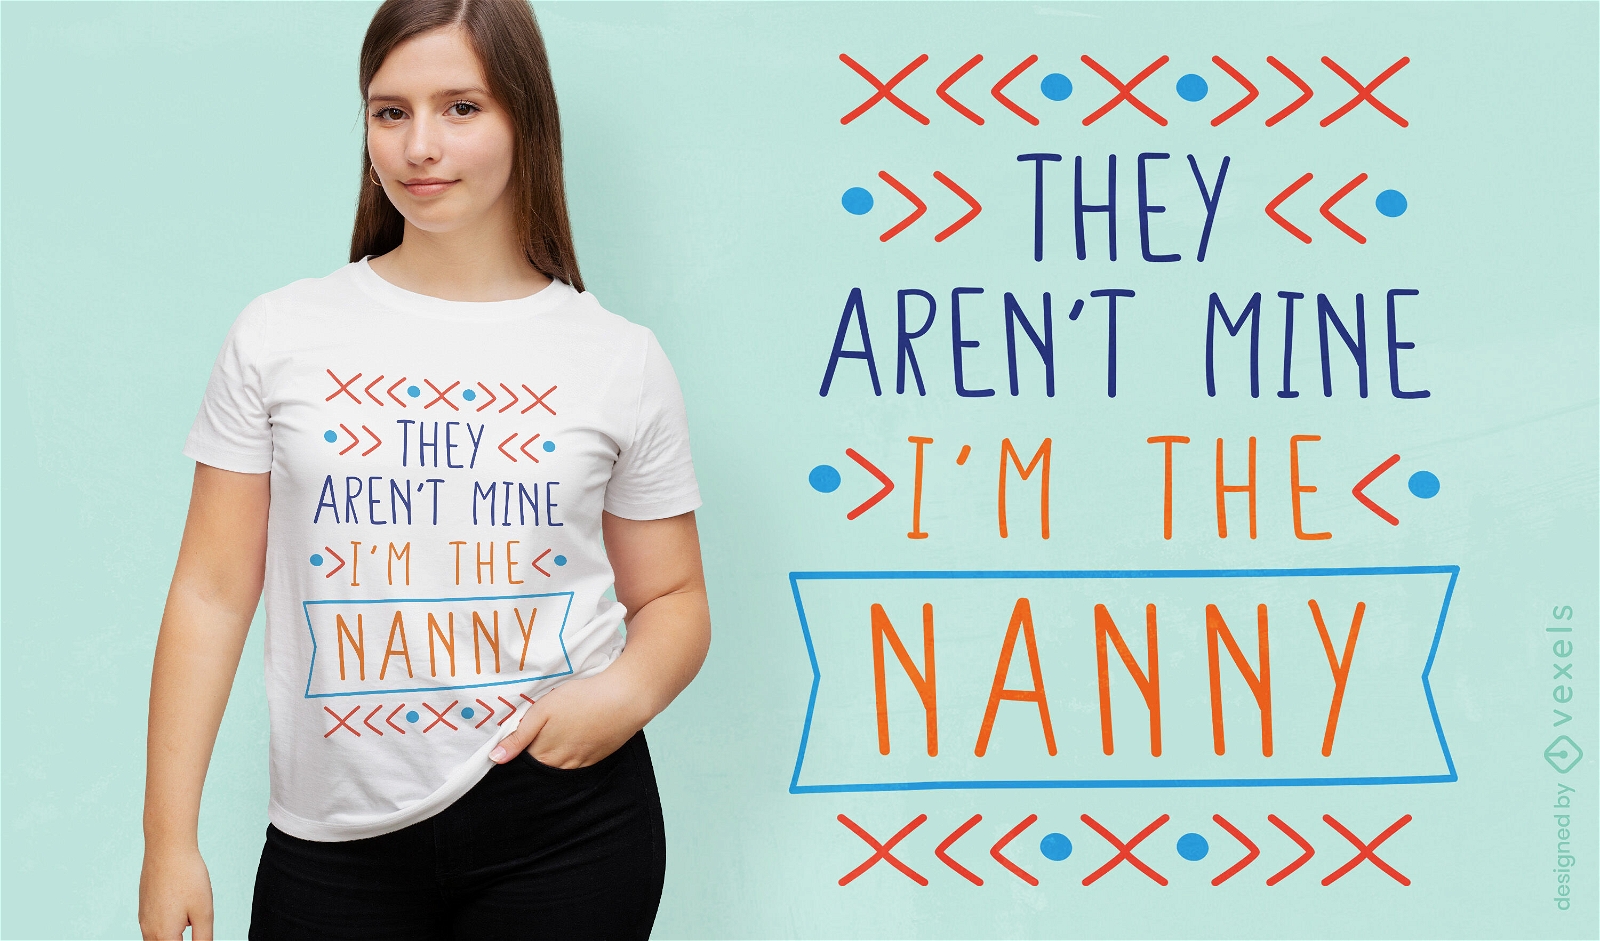 Humorous nanny statement t-shirt design